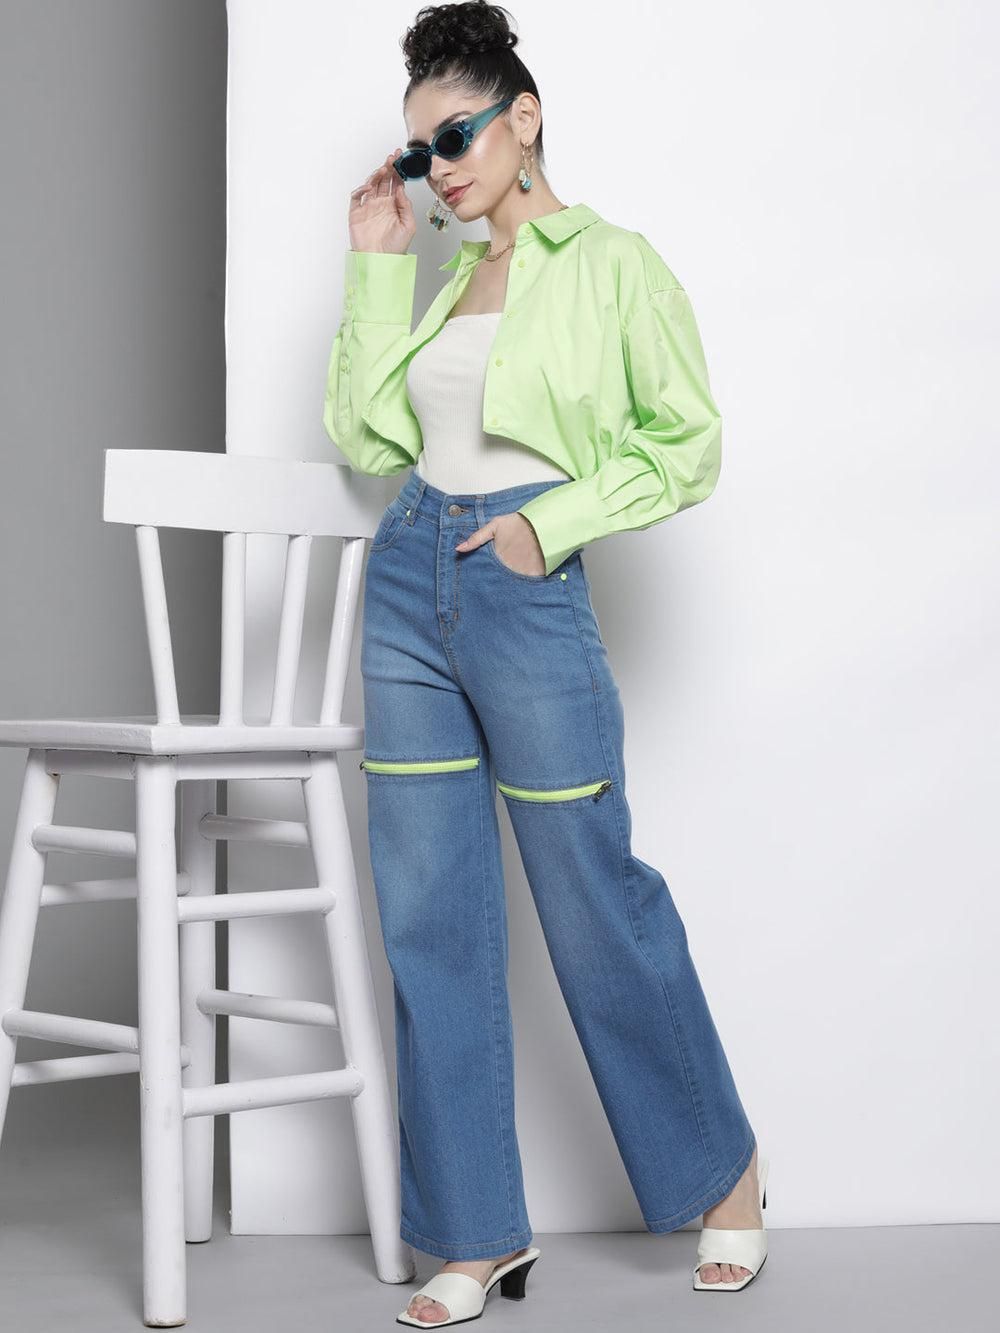 Sassafras Women's Solid Blue Front Zipper Stretch Straight Jeans